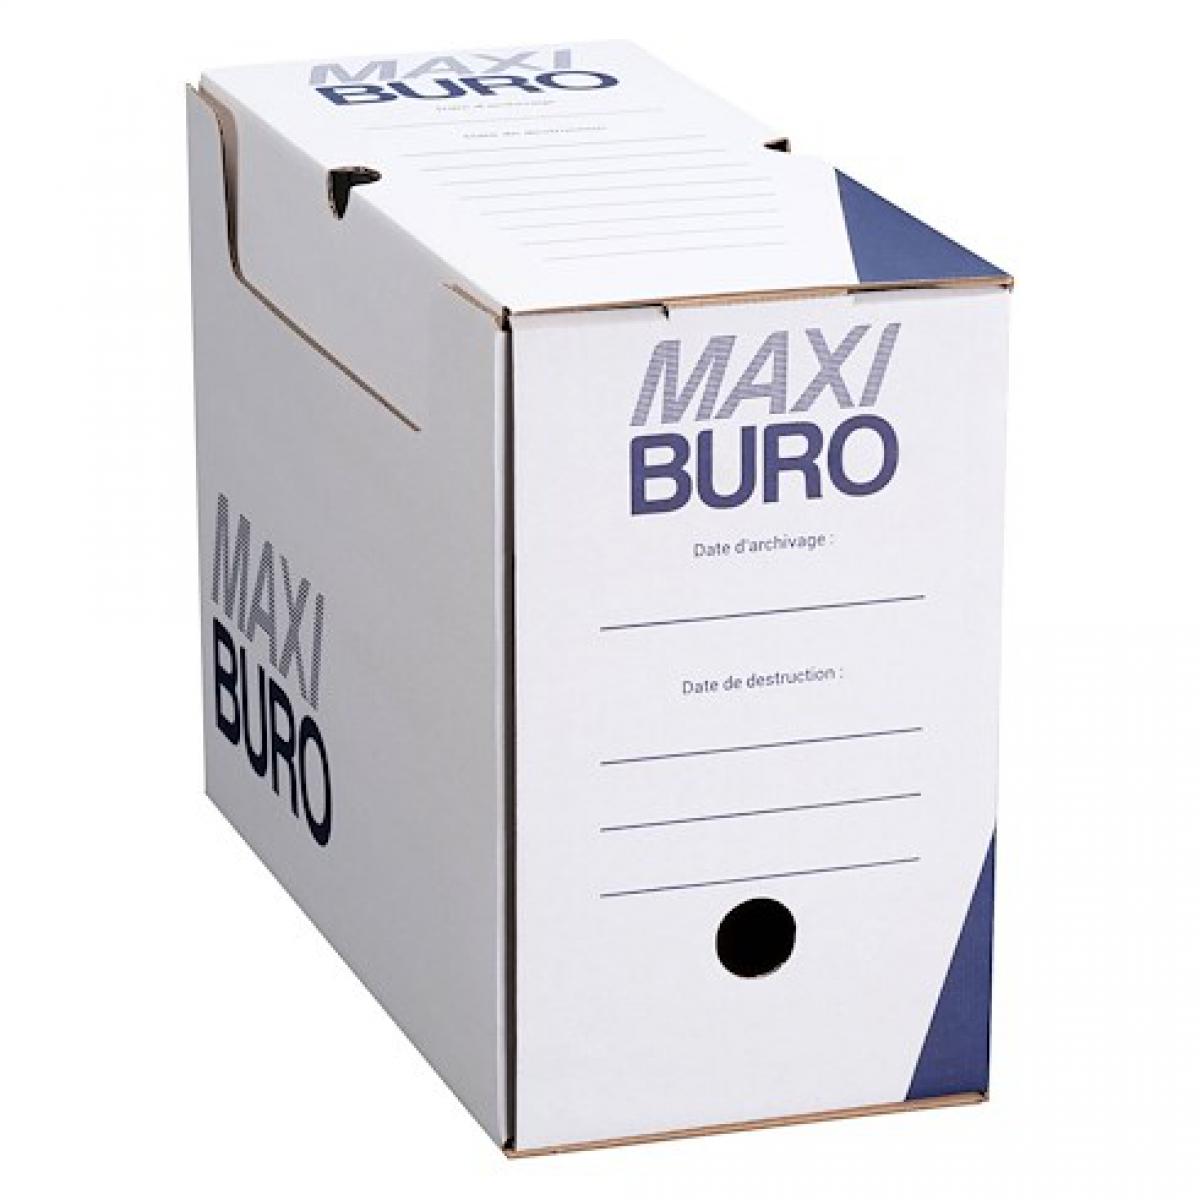 Maxiburo - Boîtes à archives blanches dos 15 cm - Maxiburo - Lot de 20 - Accessoires Bureau